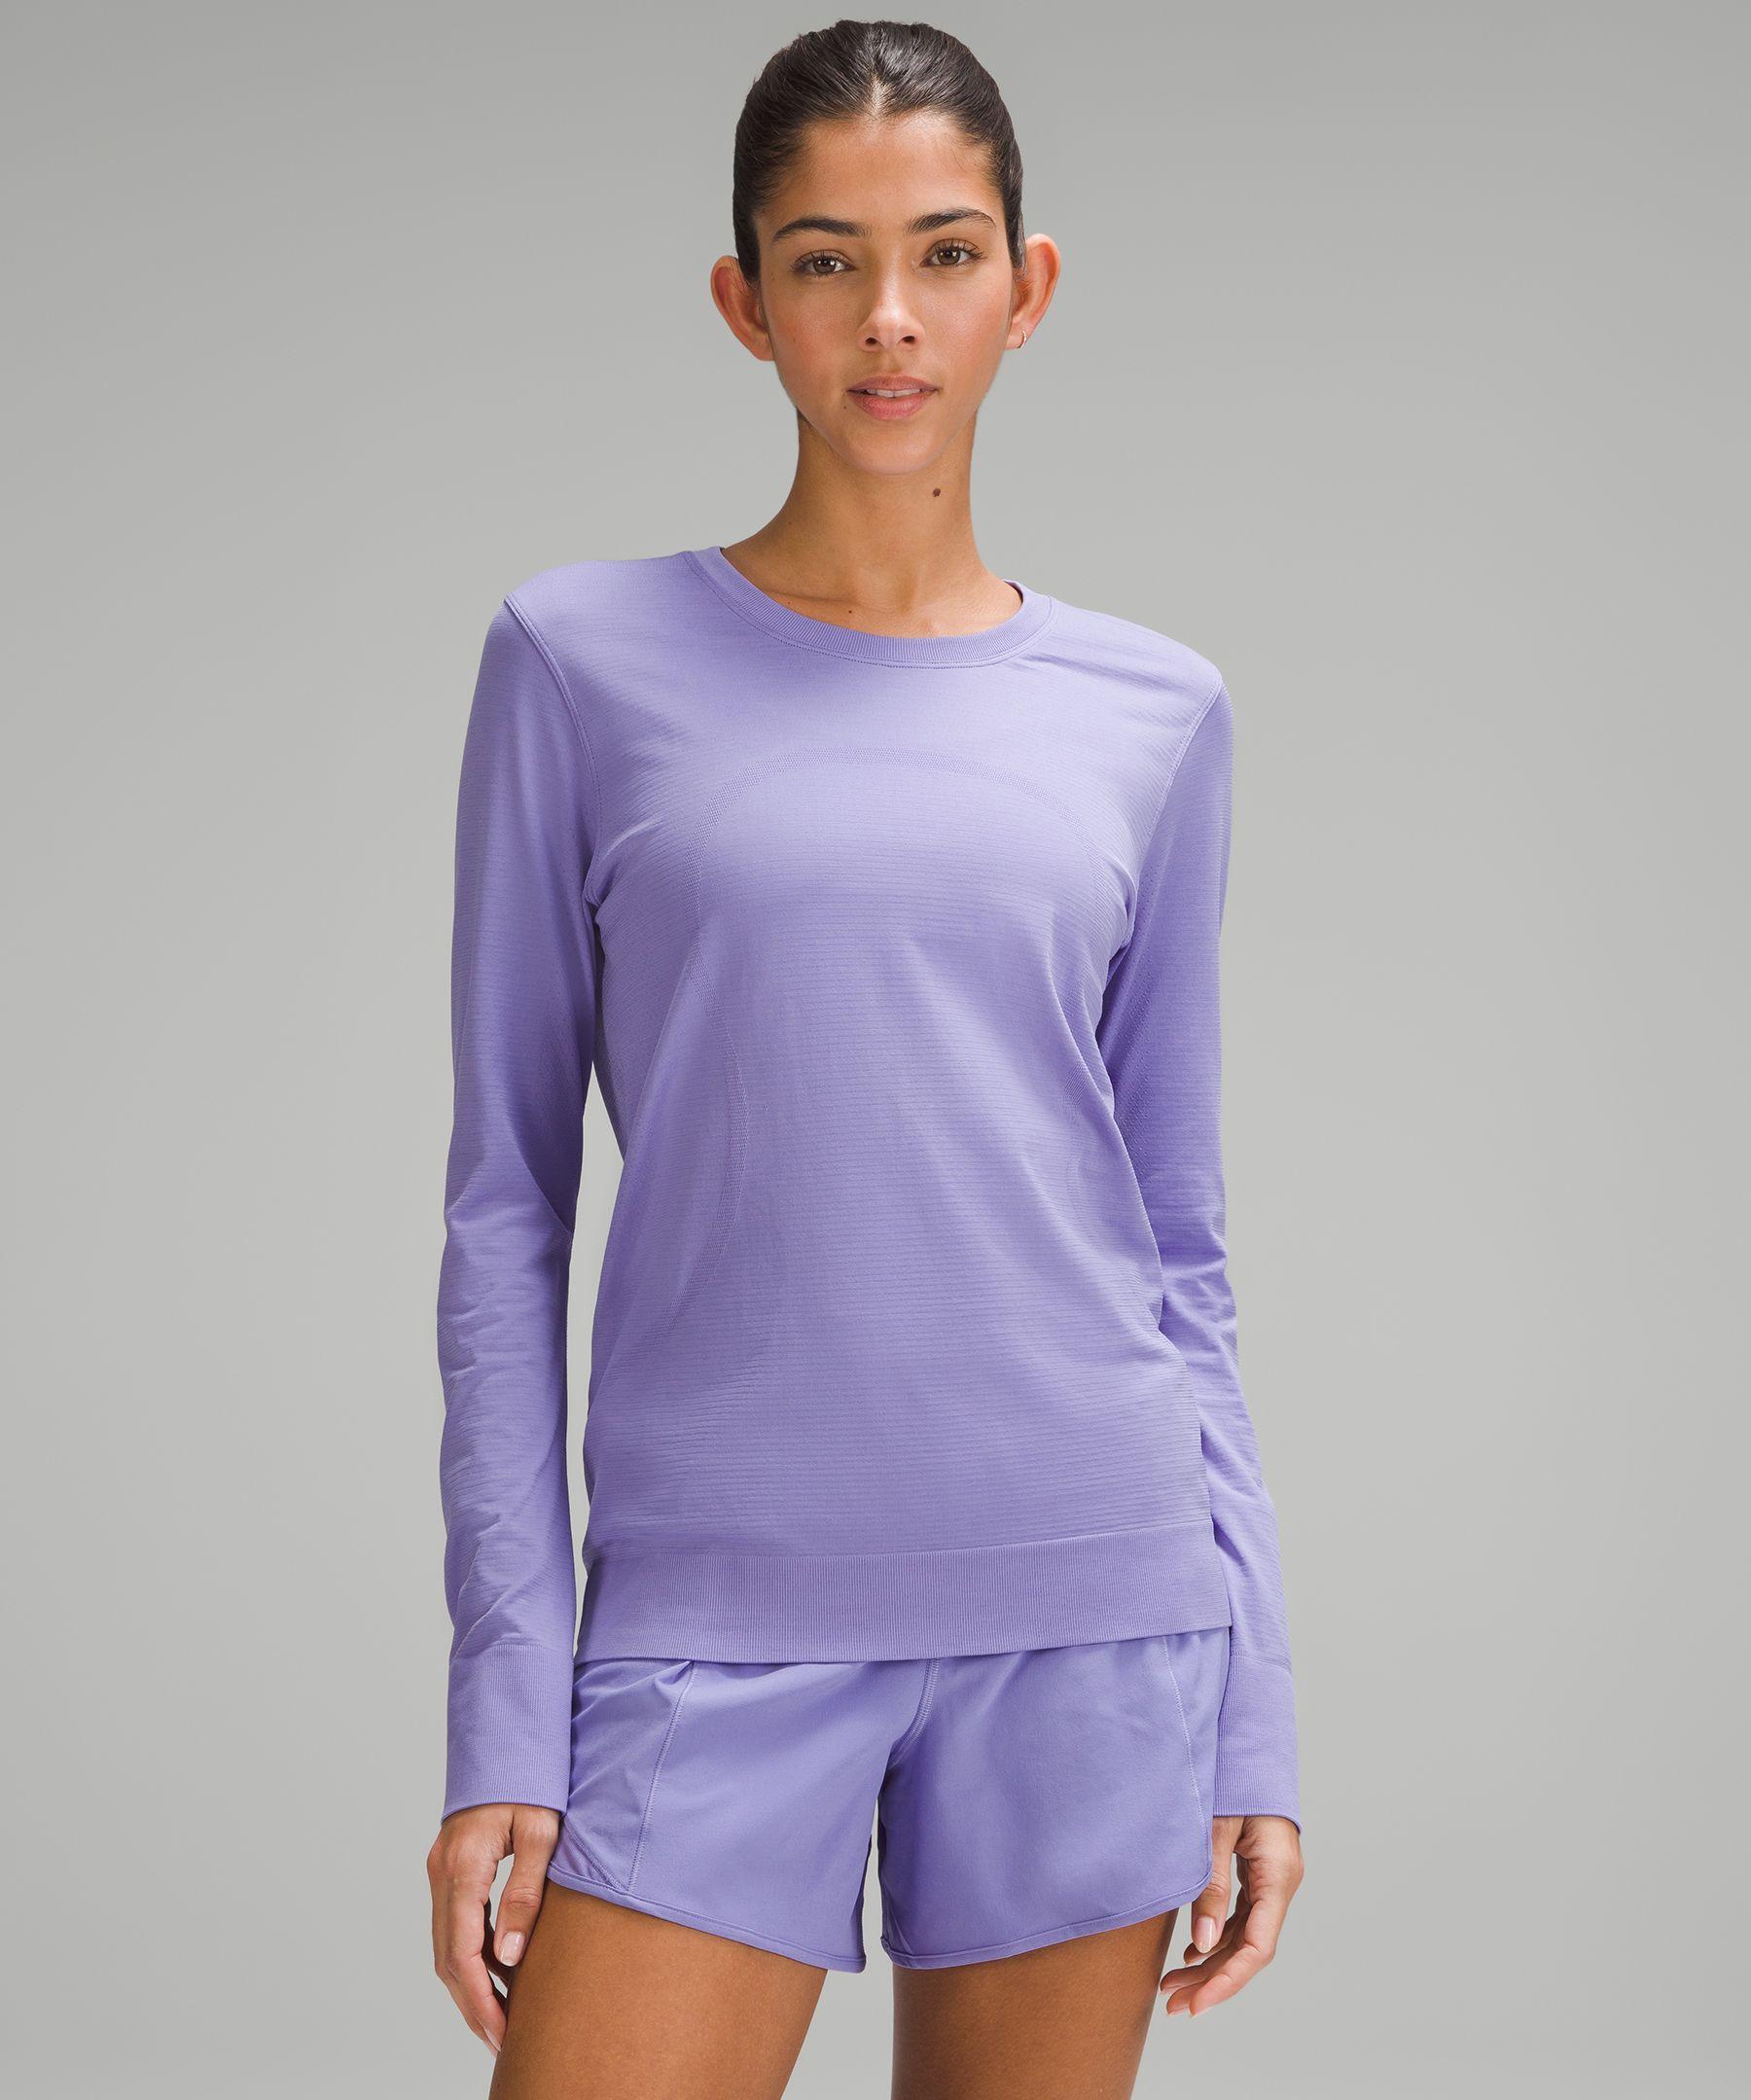 https://cdna.lystit.com/photos/lululemon/82bc004a/lululemon-athletica-designer-Dark-LavenderDark-Lavender-Swiftly-Relaxed-Long-sleeve-Shirt.jpeg